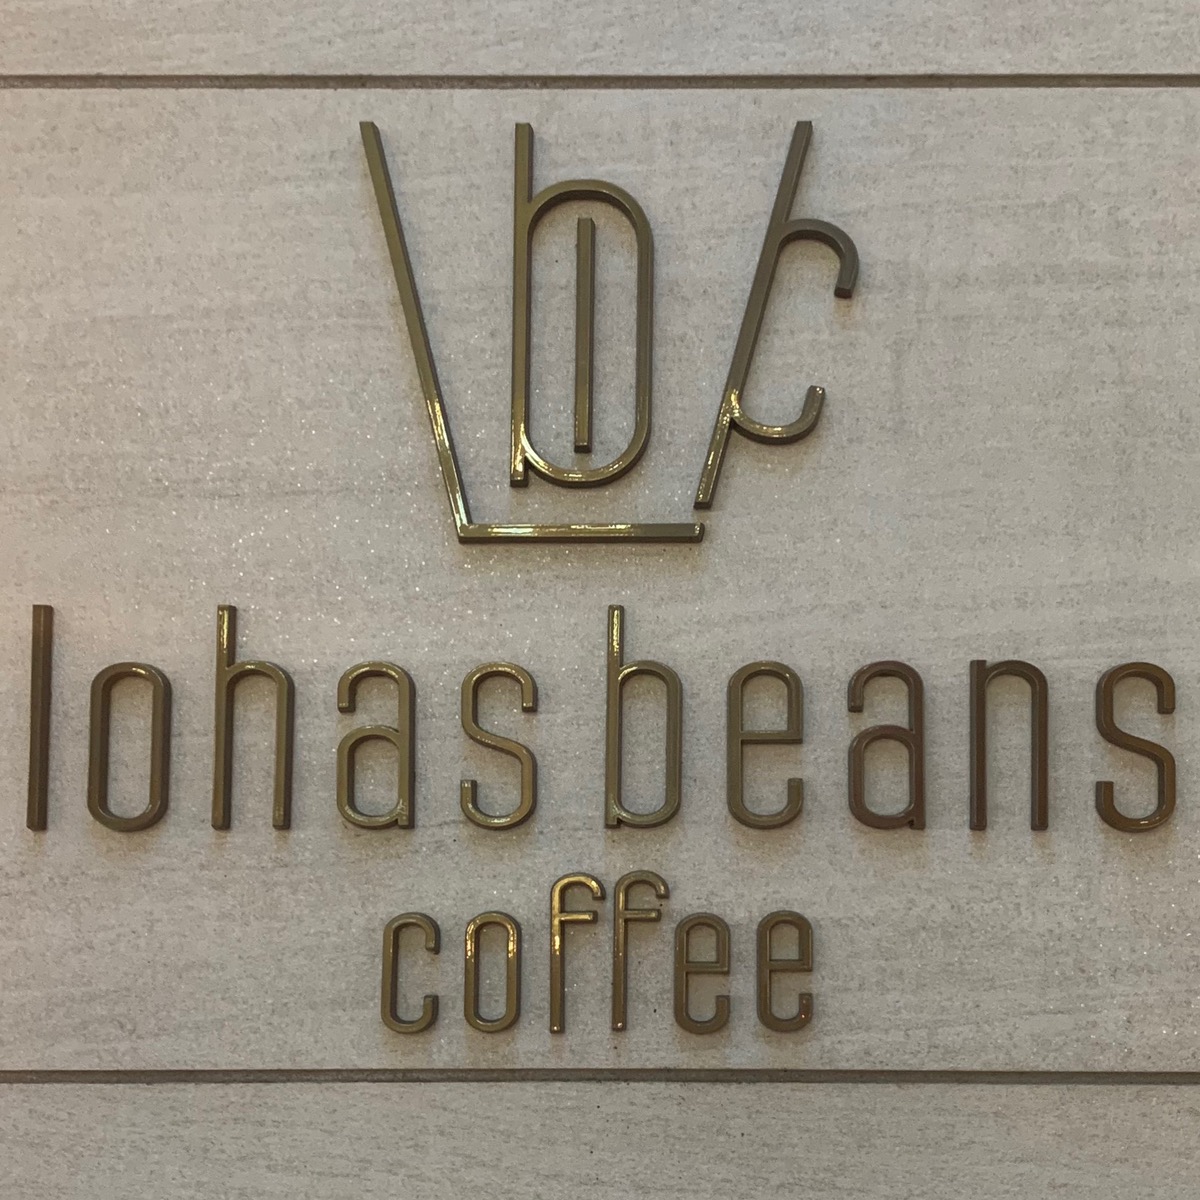 Lohas-beans-coffee